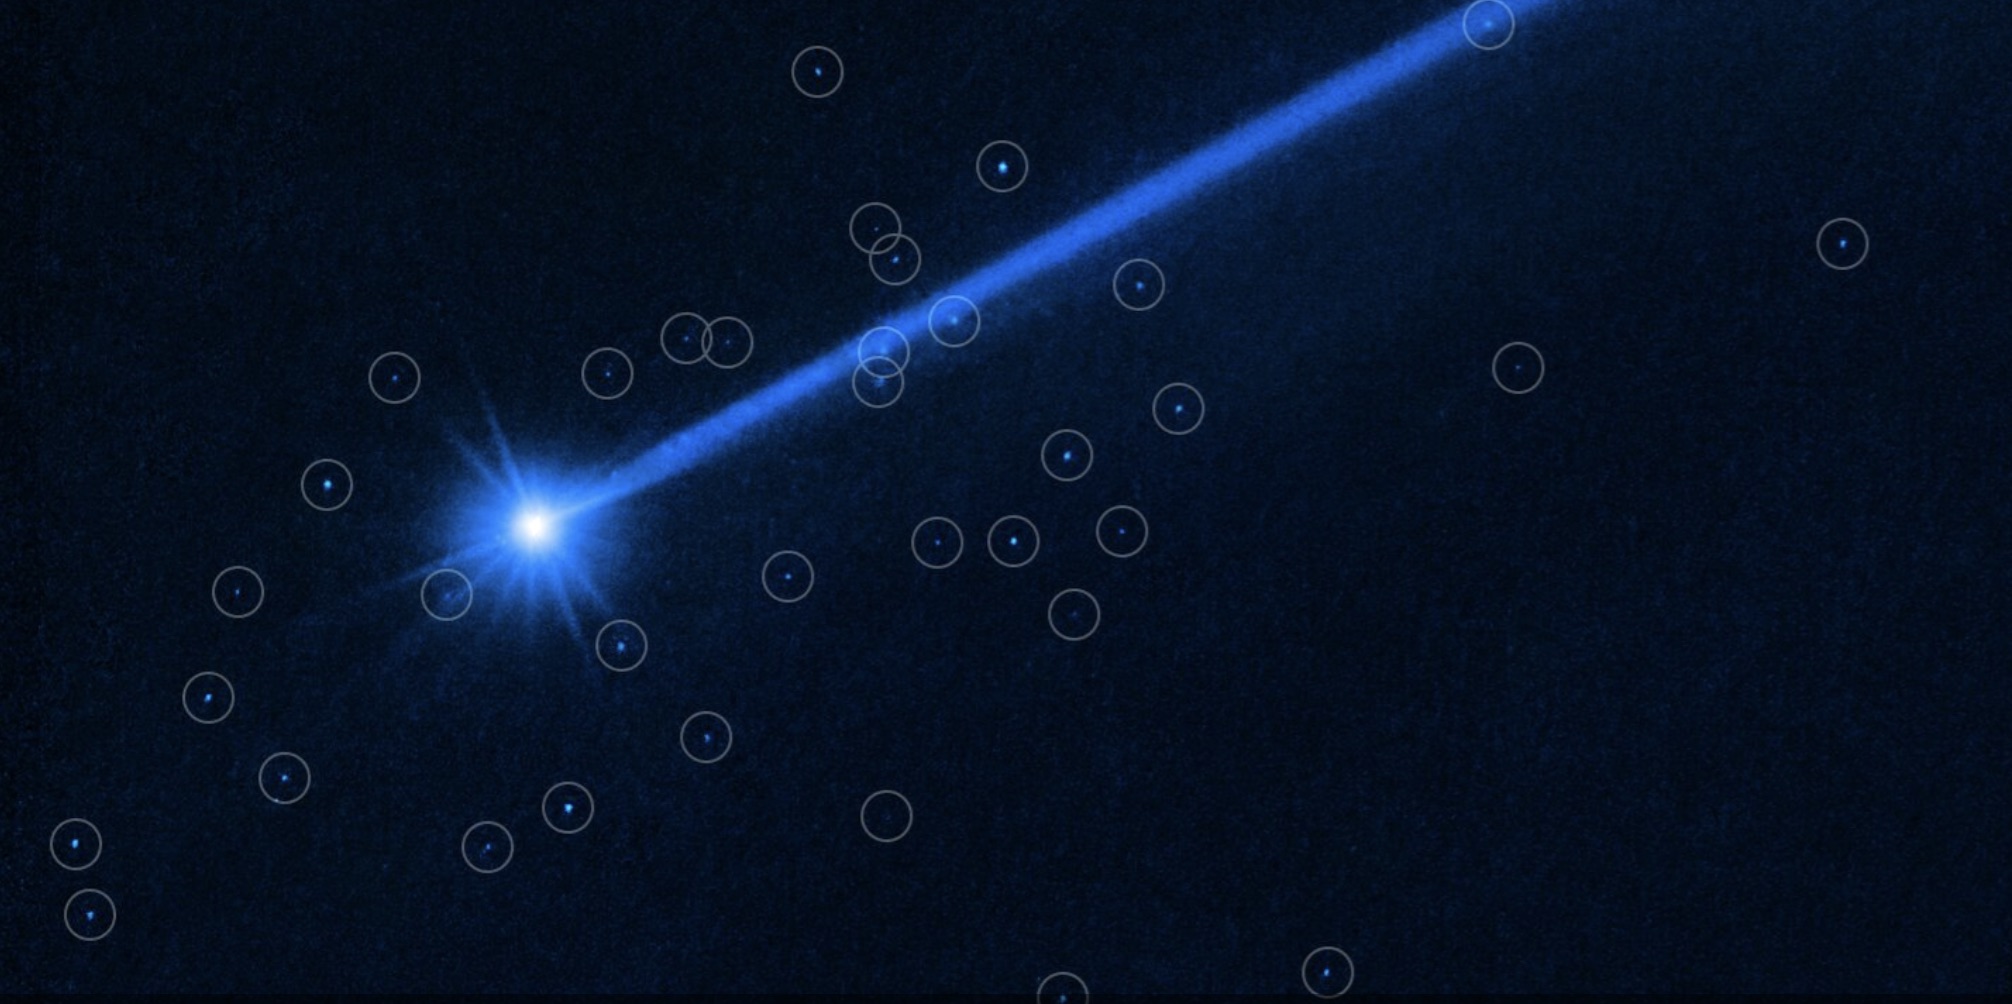 Hubble image of asteroid Dimorphos. Credit: NASA, ESA, David Jewitt (UCLA), Image Processing: Alyssa Pagan (STScI).